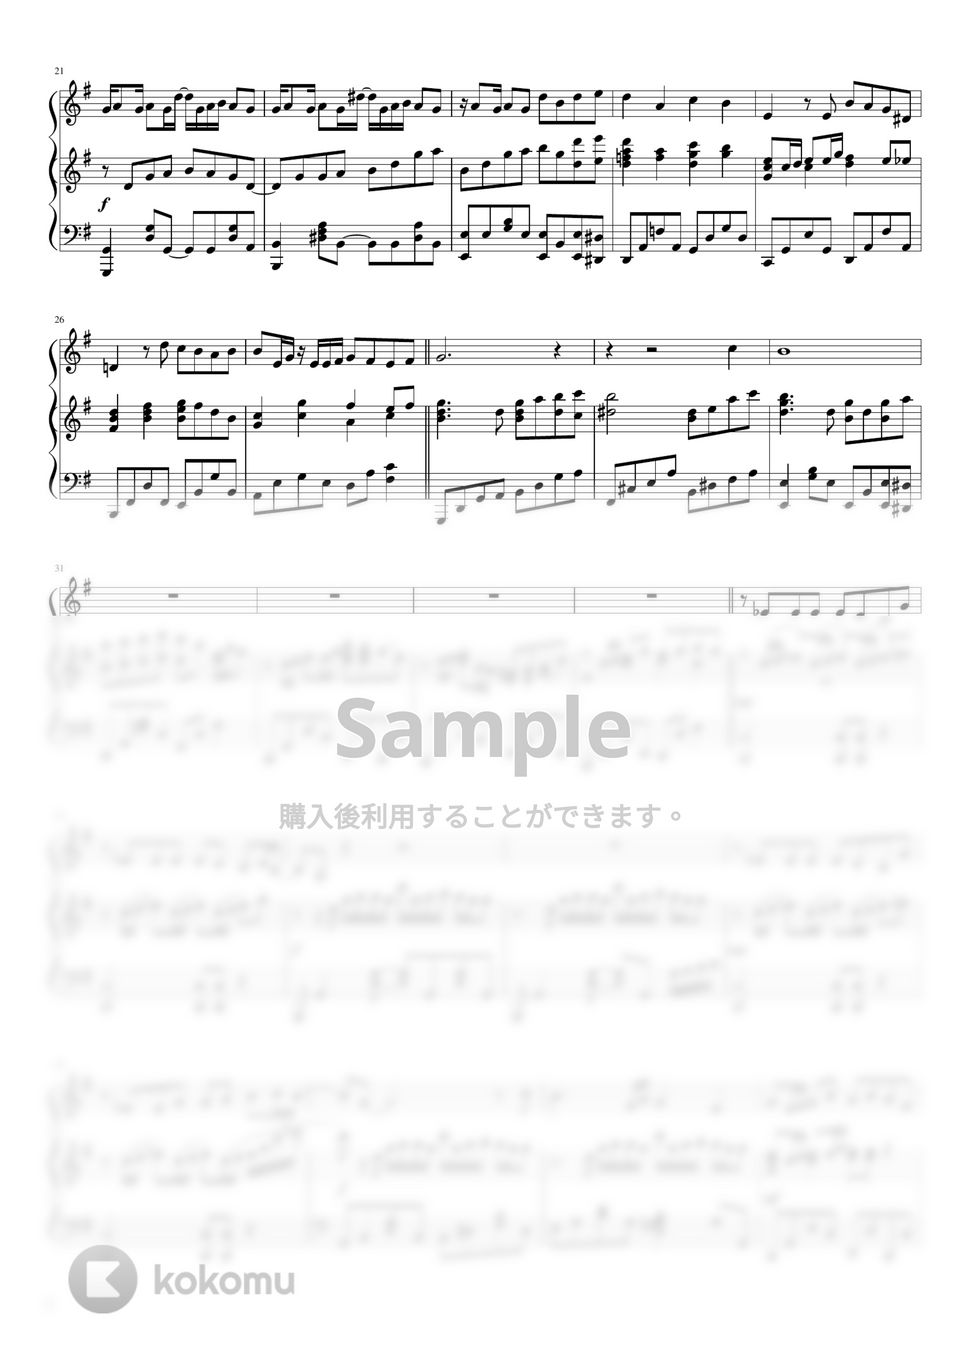 Ayase - 【ピアノ伴奏】ラブレター (スコア譜 / 中級～上級 / YOASOBI) by さく山P